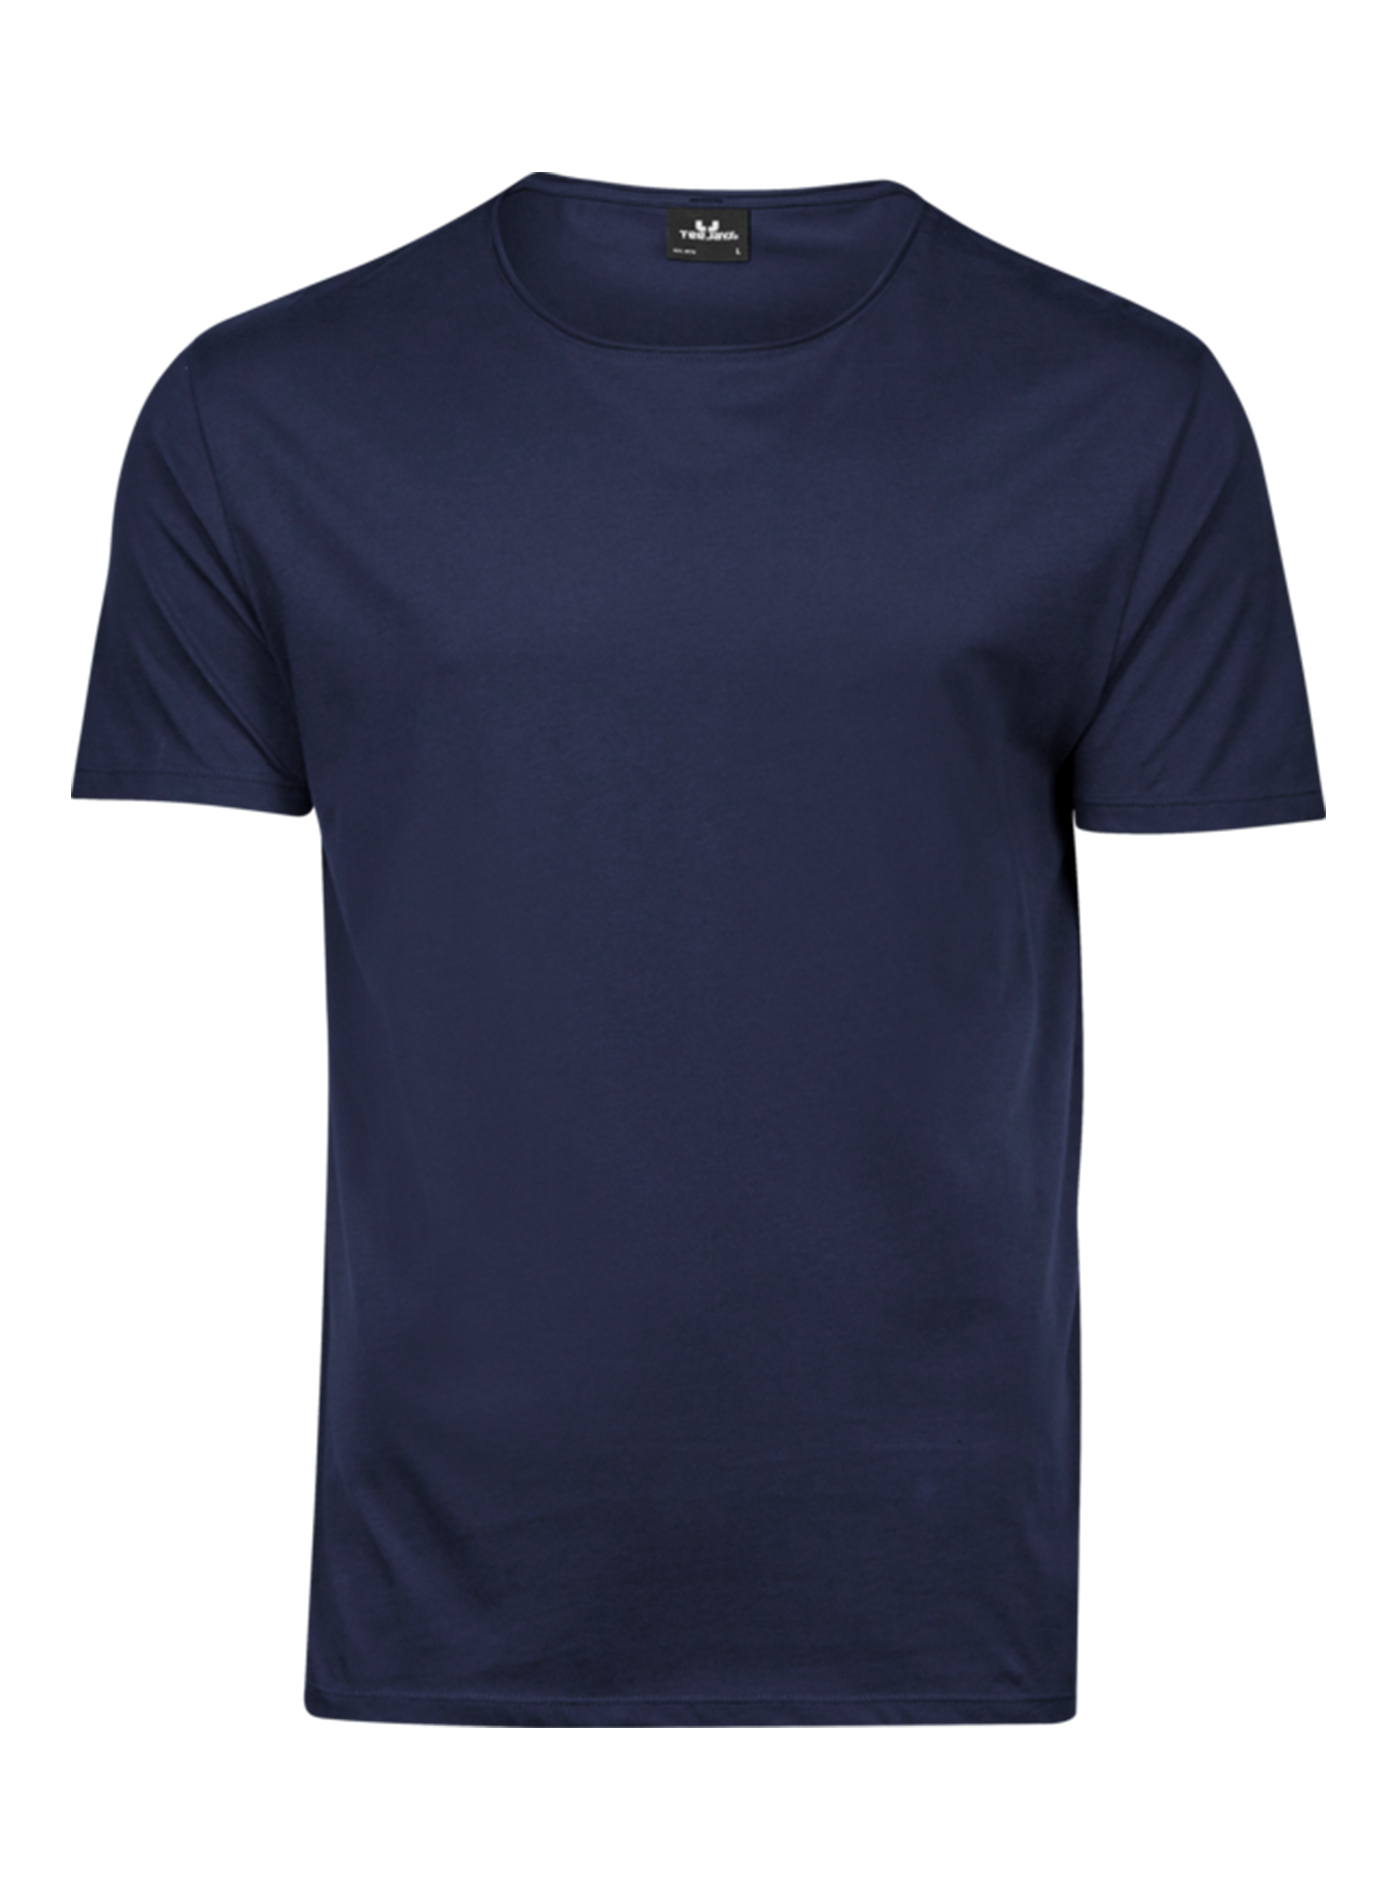 Pánské tričko Raw Tee Jays - Námořní modrá XL